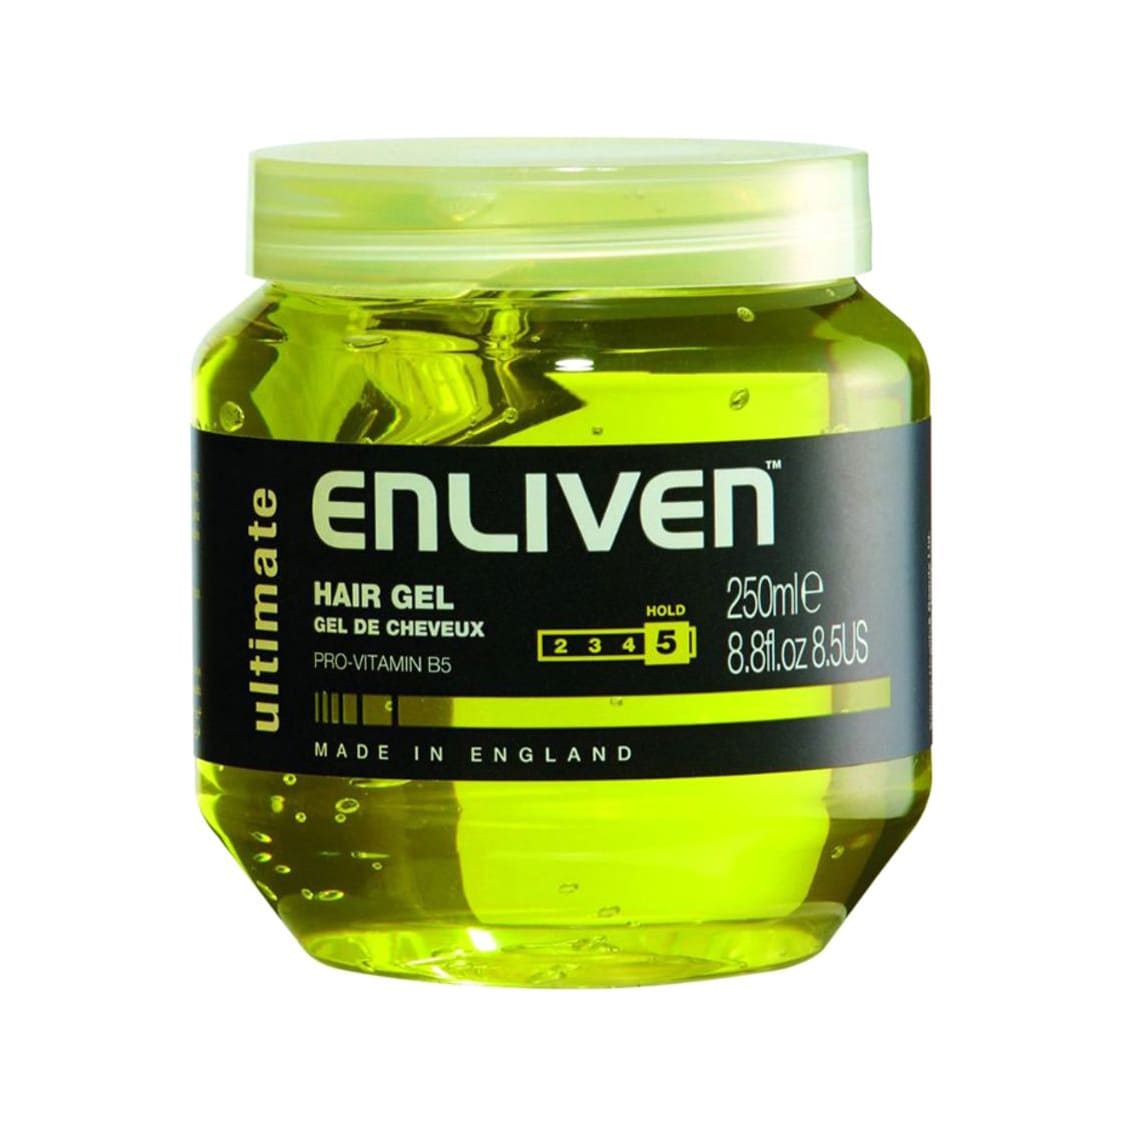 Enliven Hold 5 Ultimate Hair Gel - Bloom Pharmacy